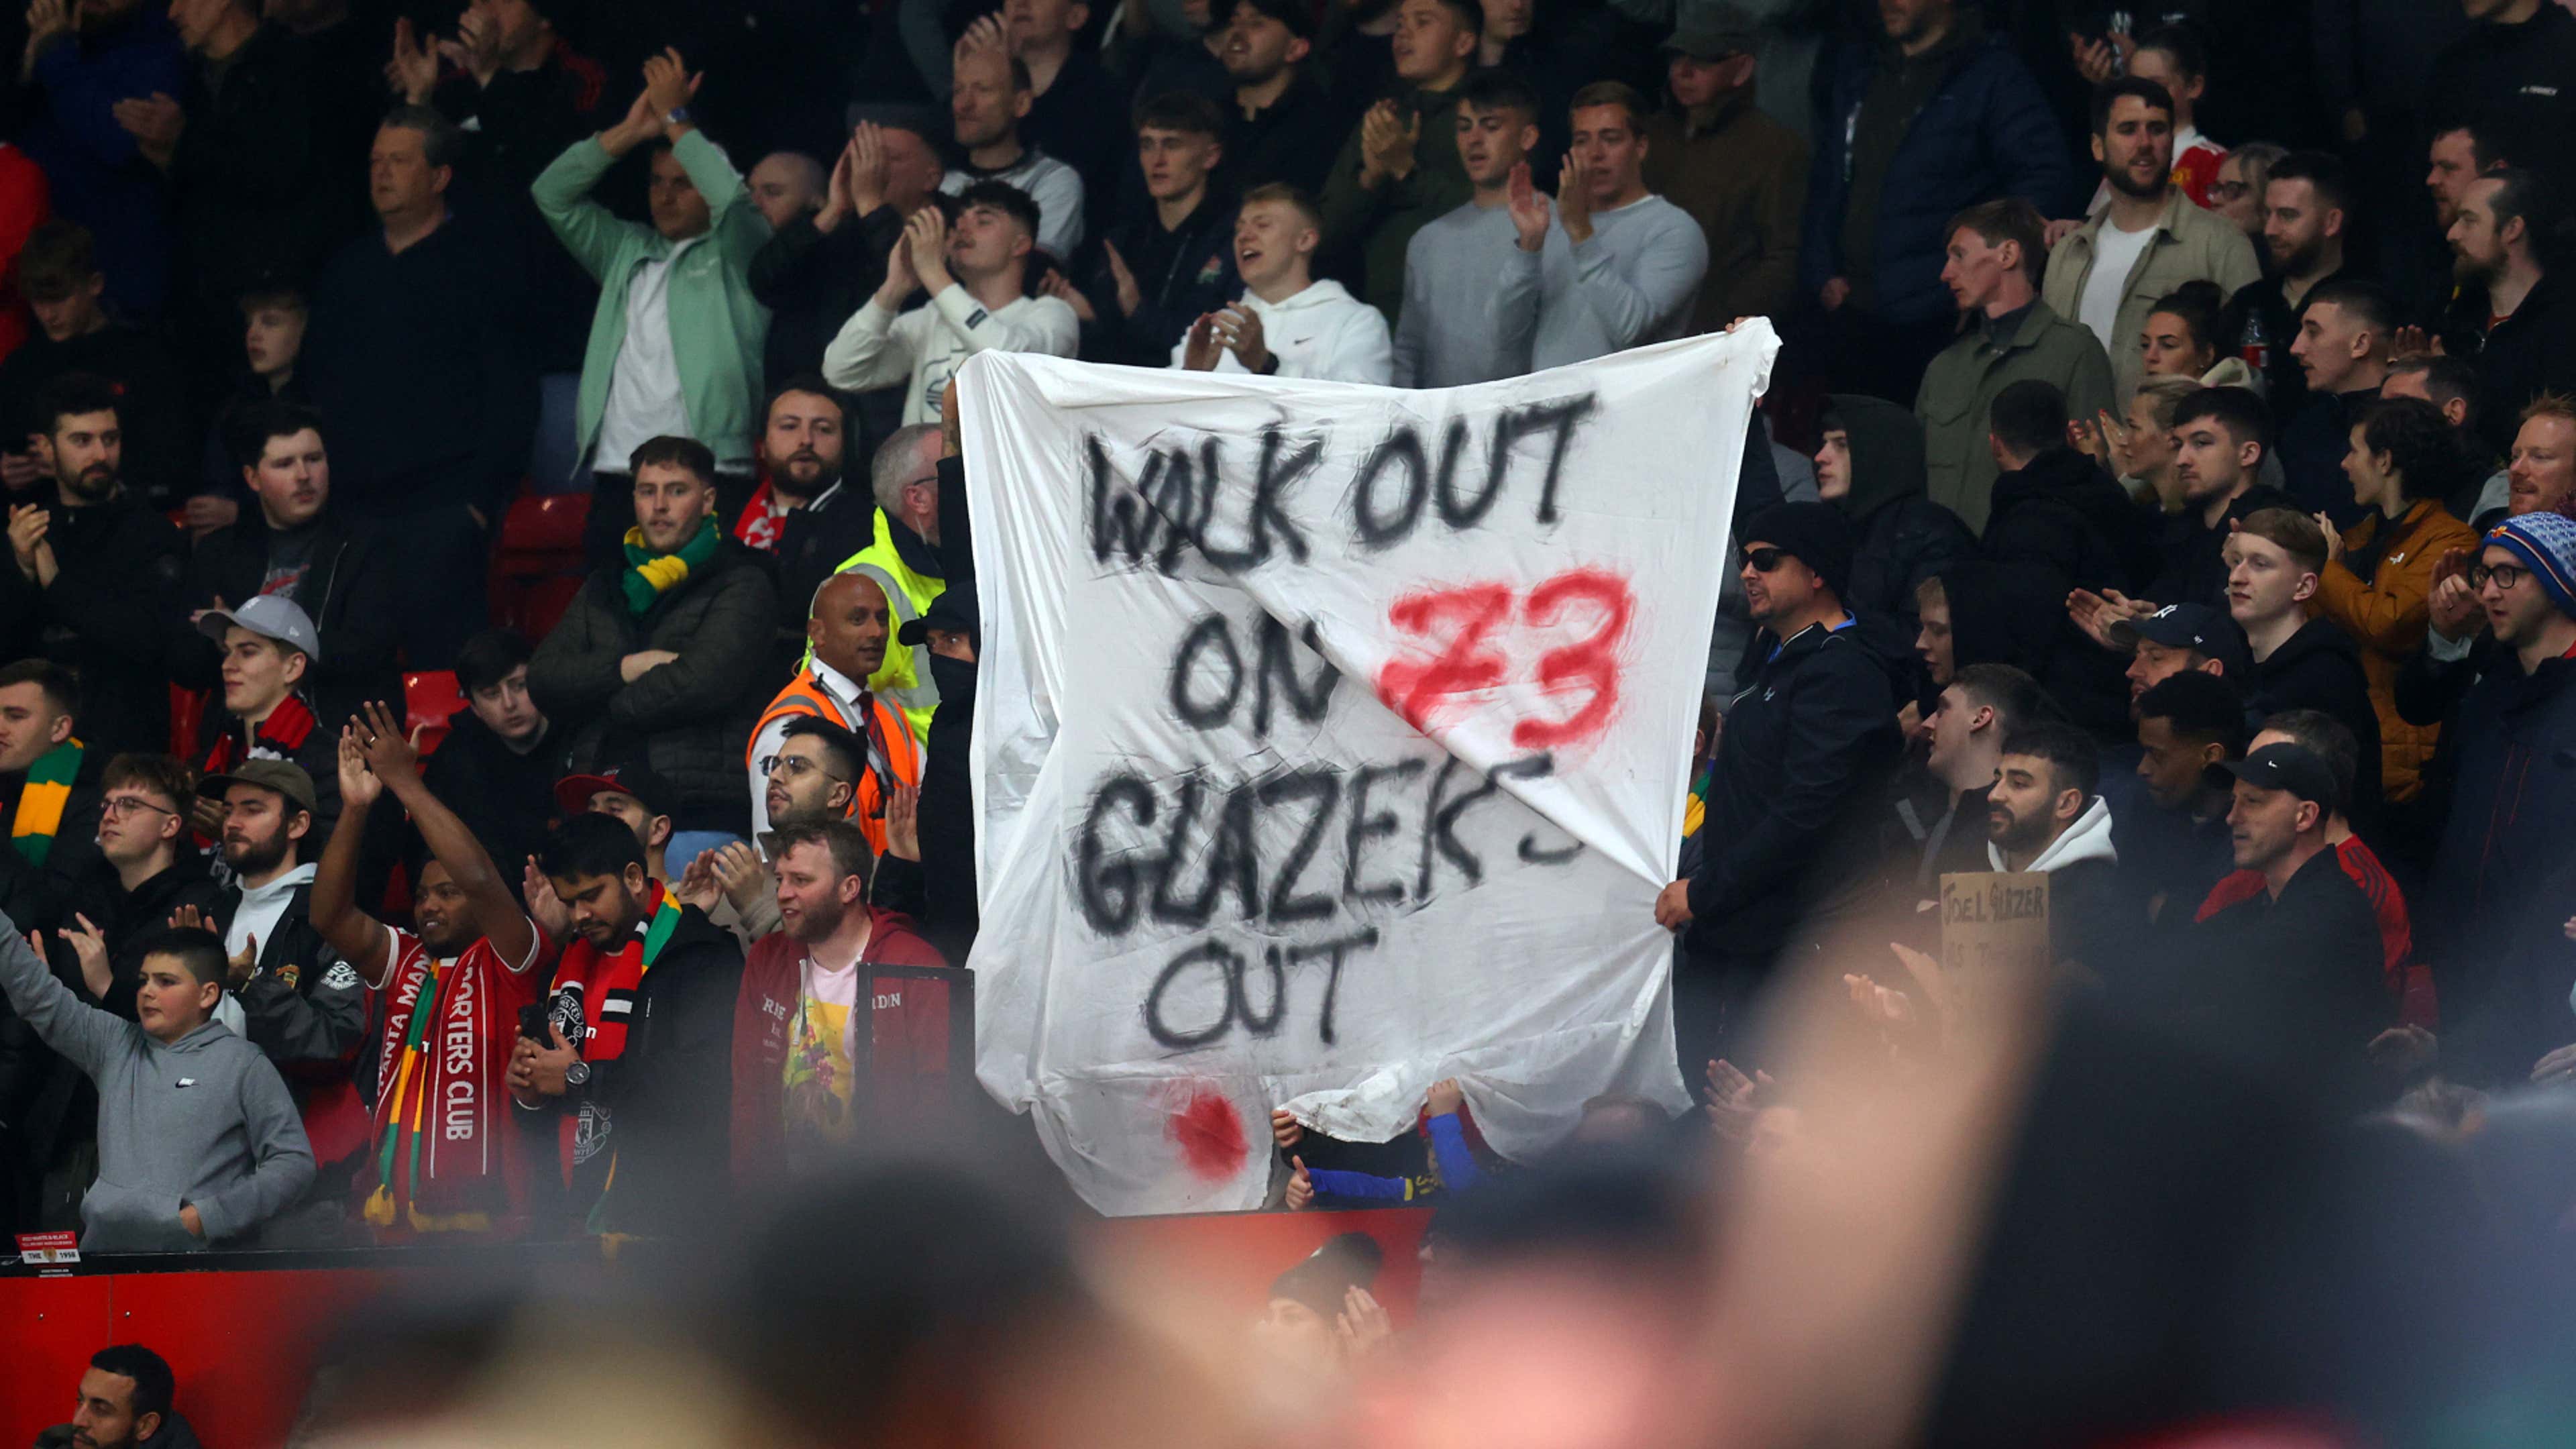 Manchester United Glazer walk out